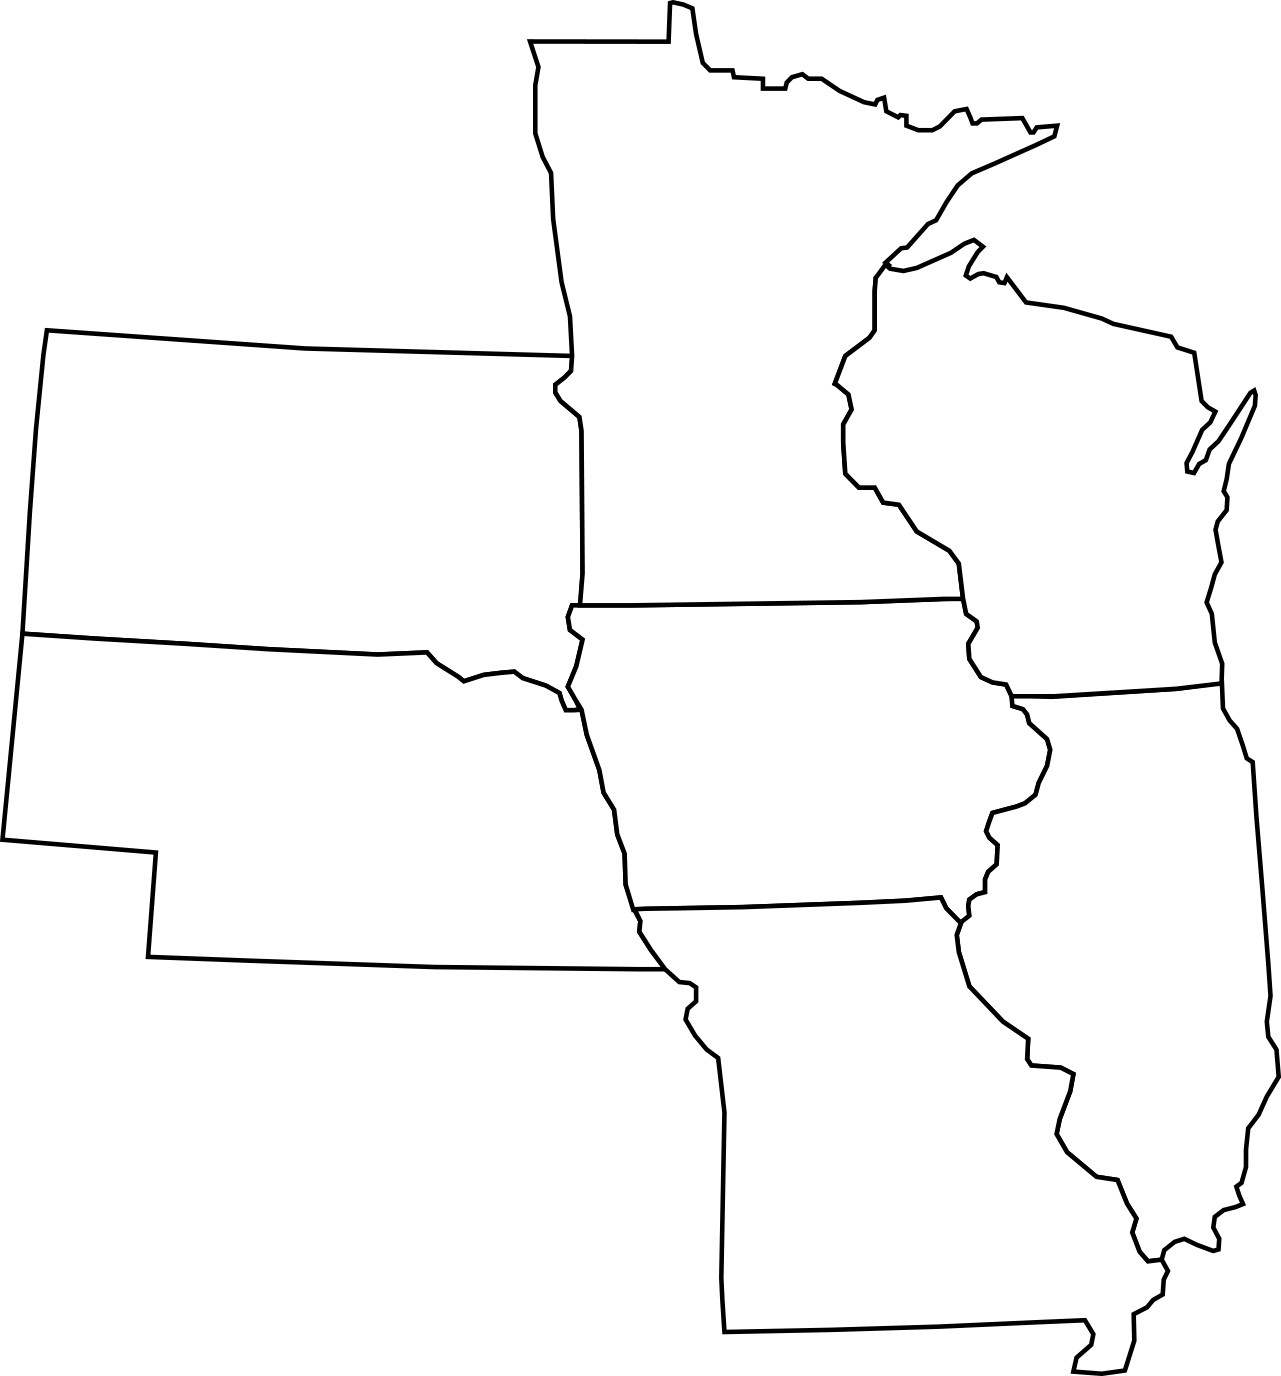 Map of Iowa and surrounding states